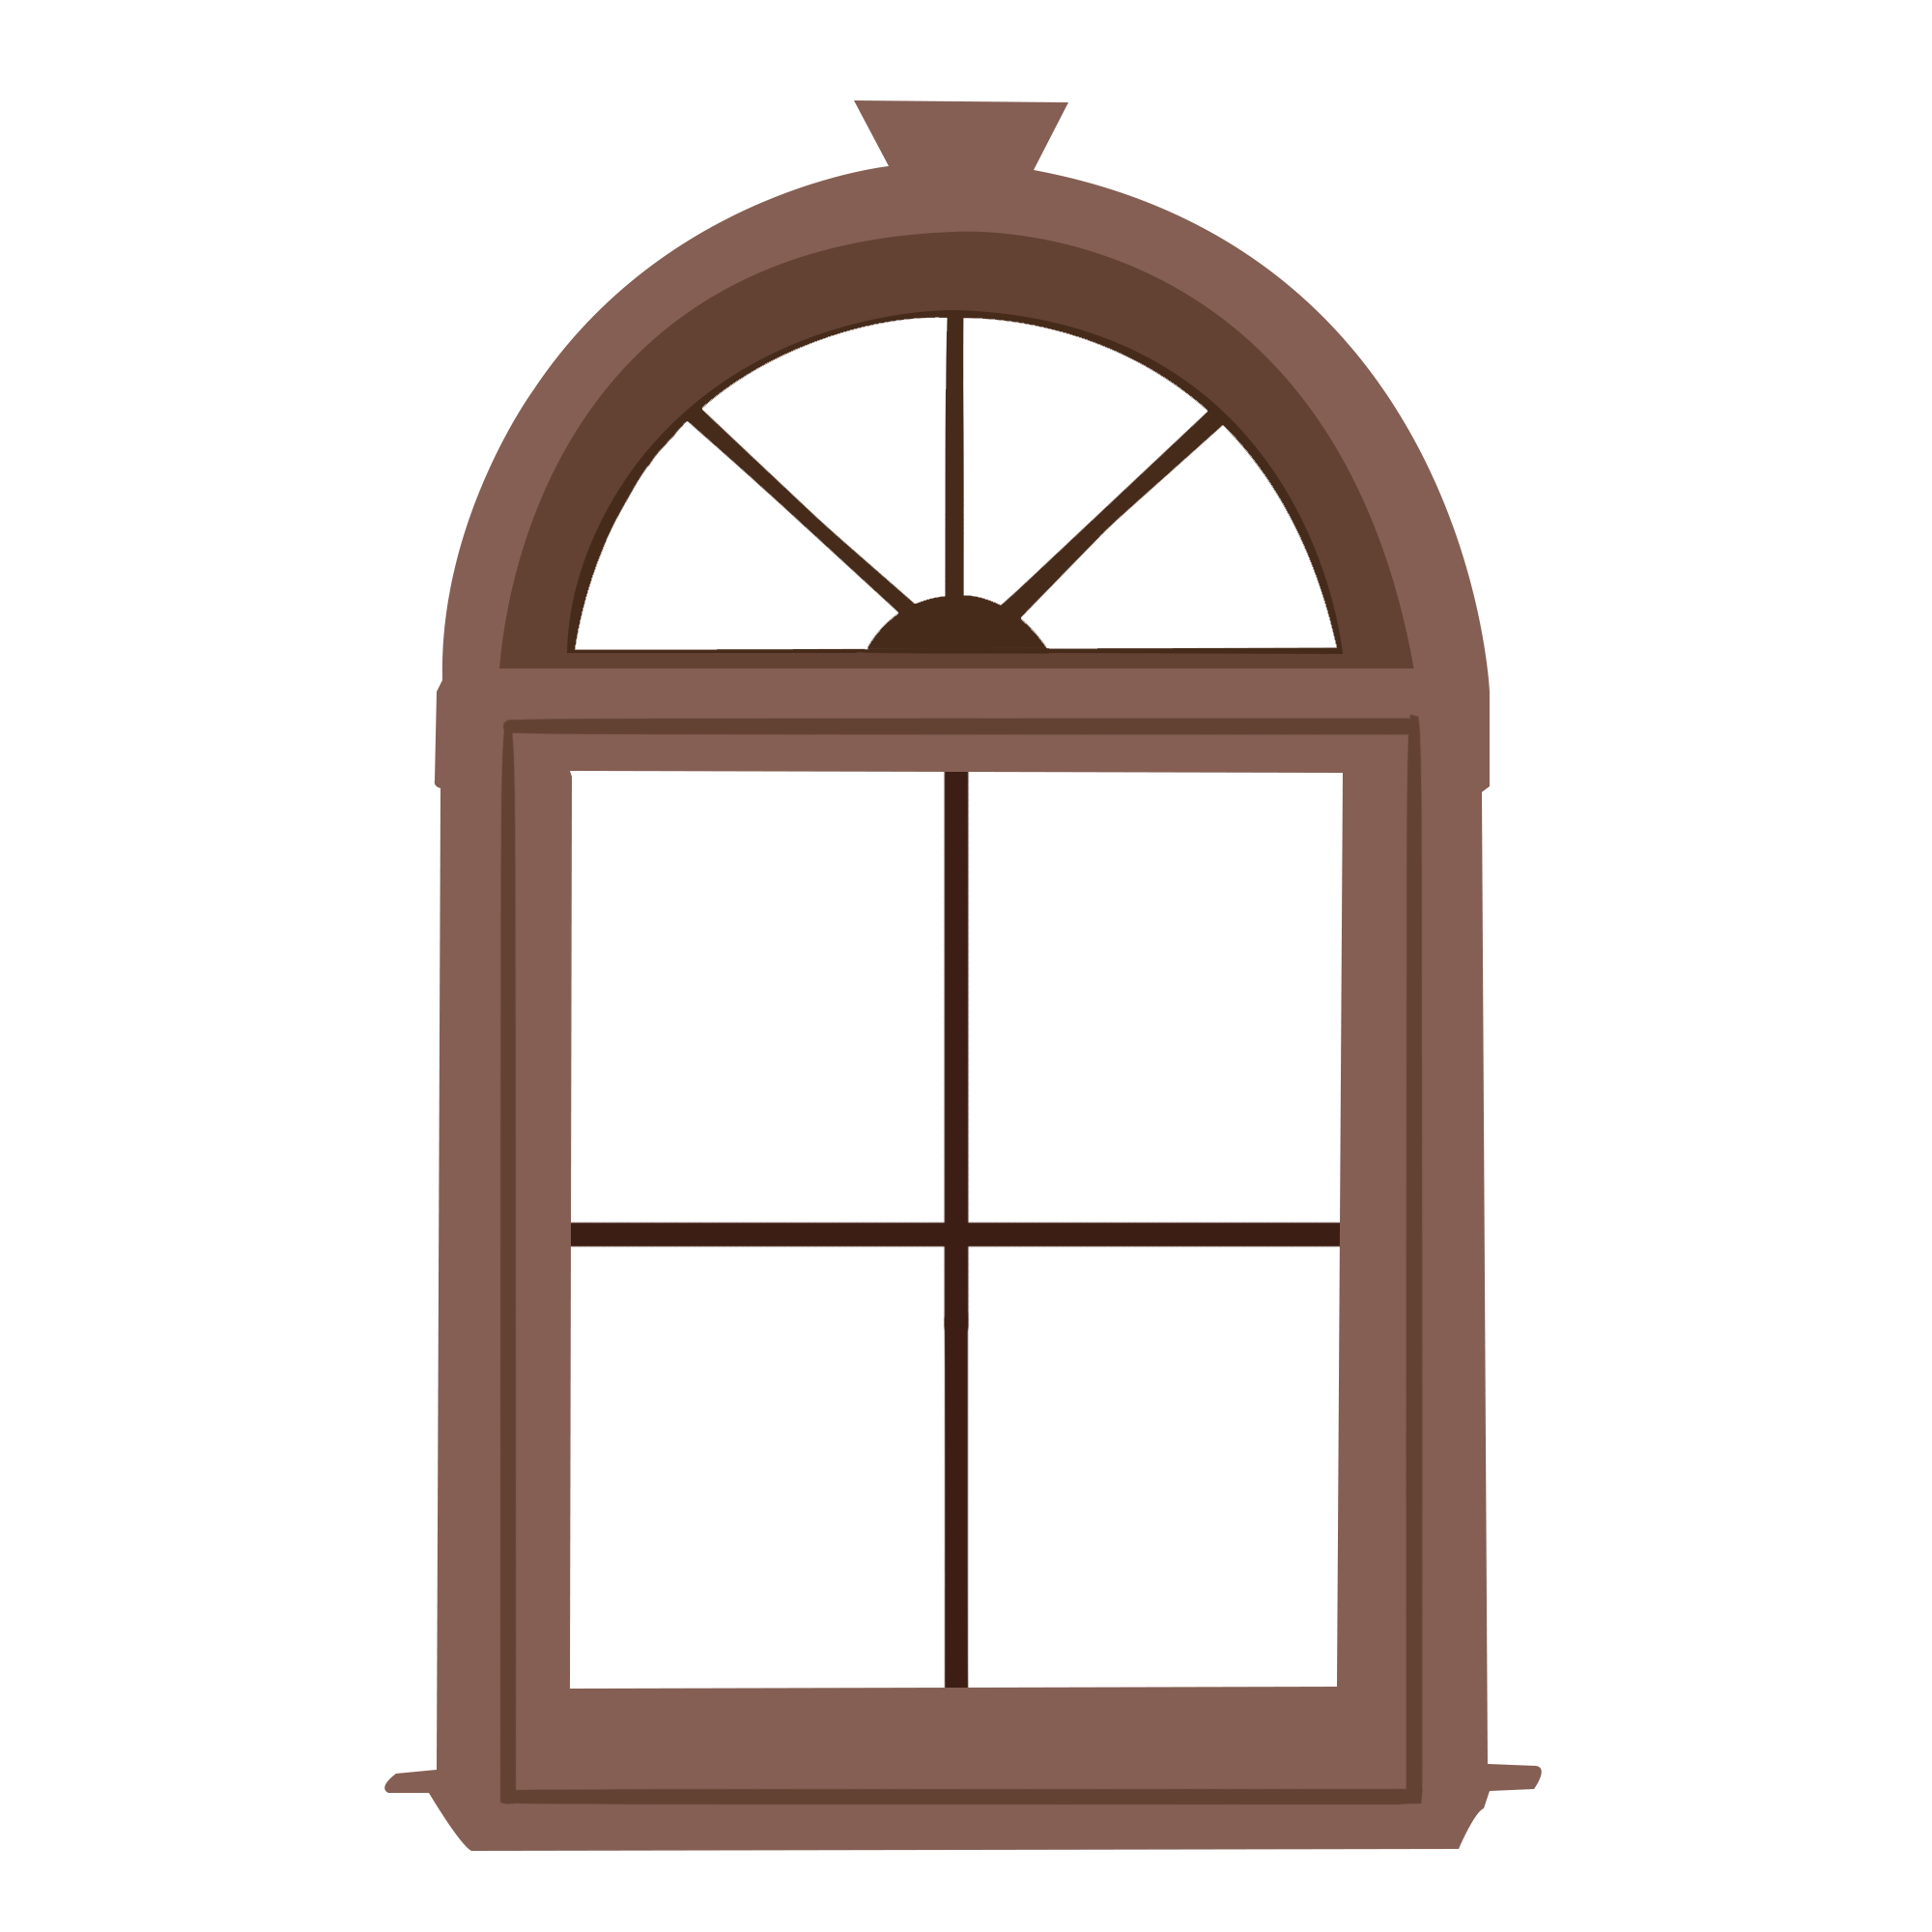 —Pngtree—wooden window_5412460